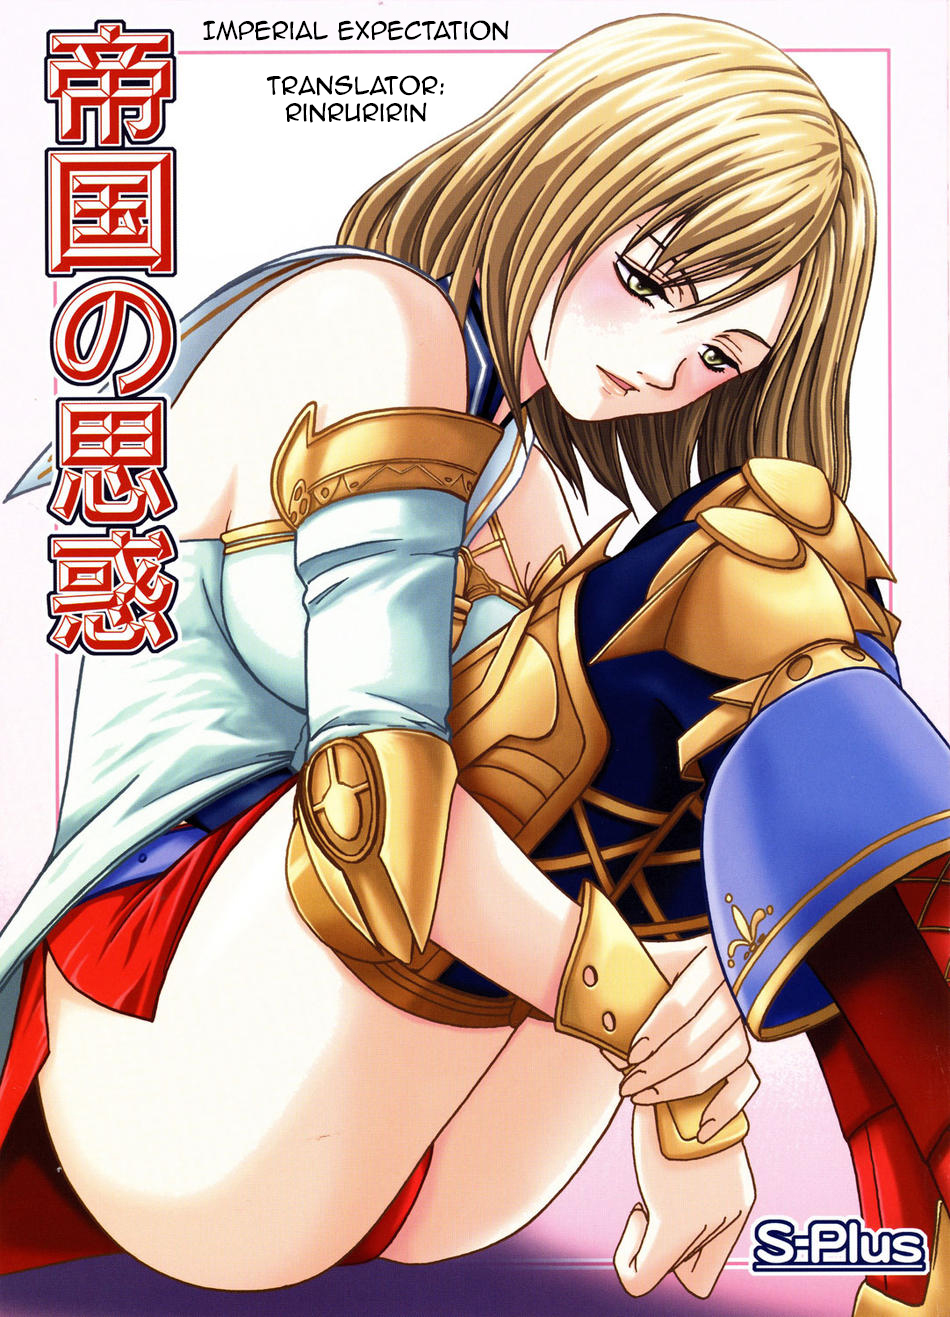 S Plus SHIYAMI Teikoku no Omowaku Imperial Expectation Final Fantasy XII English Rinruririn 733513 0001